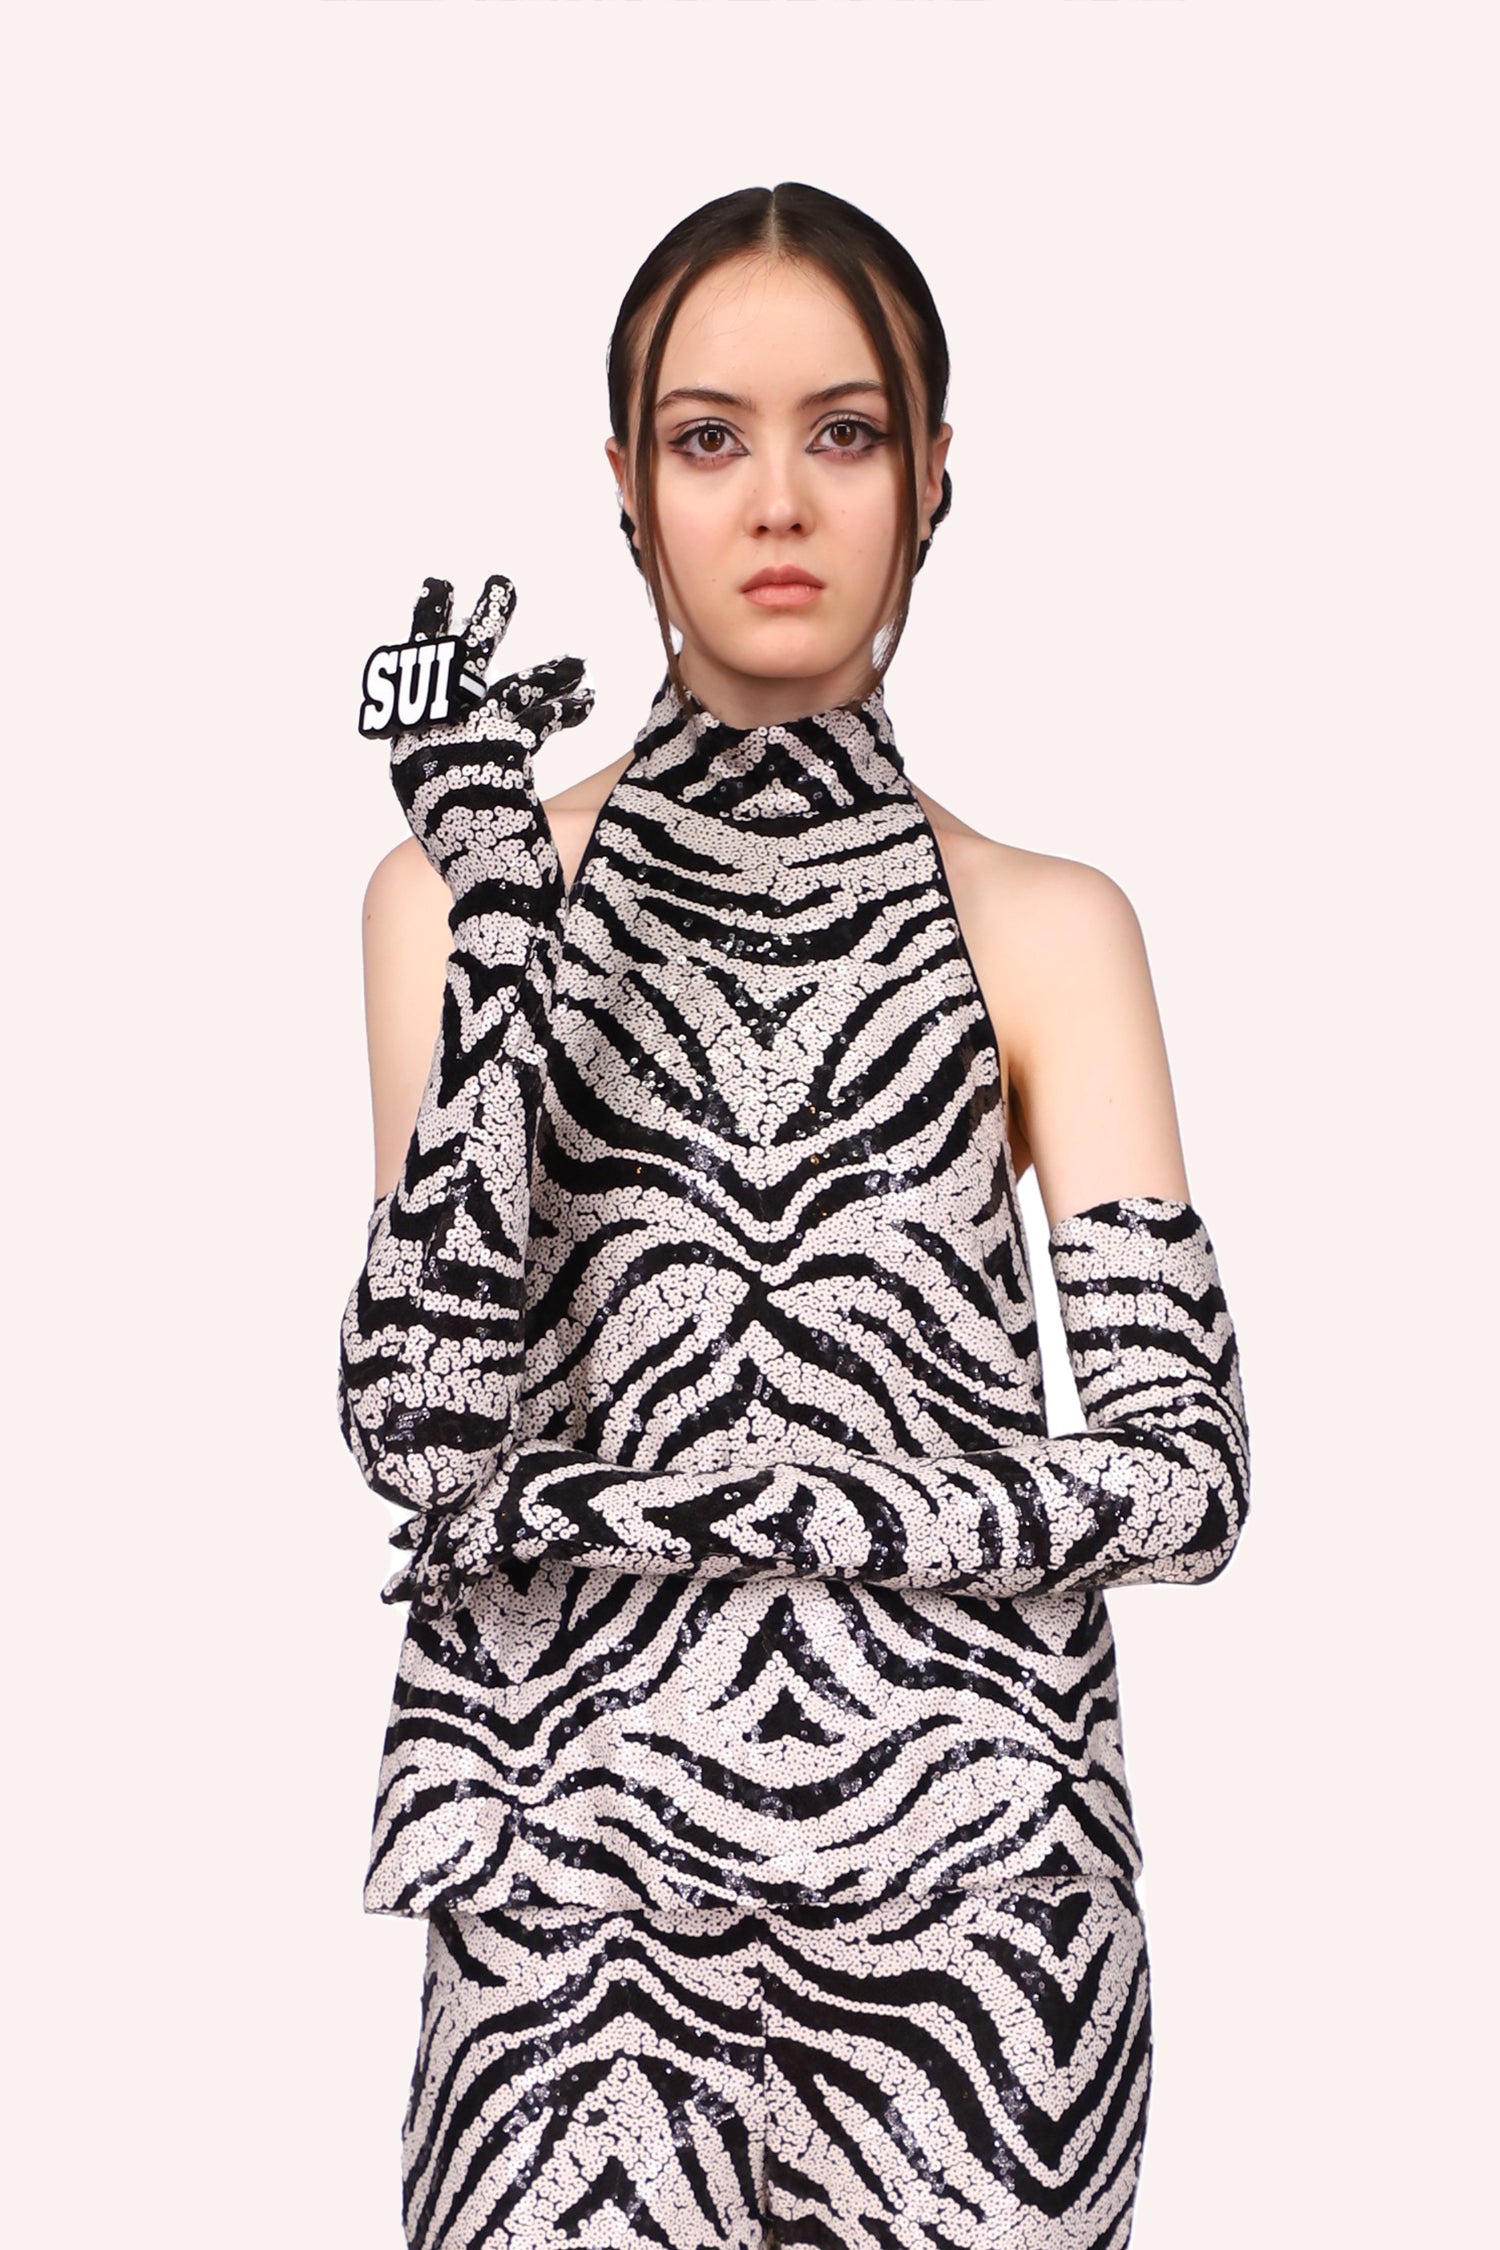 Zebra Sequins Gloves black and white sequin make as a zebra design pair with zebra sequin dress